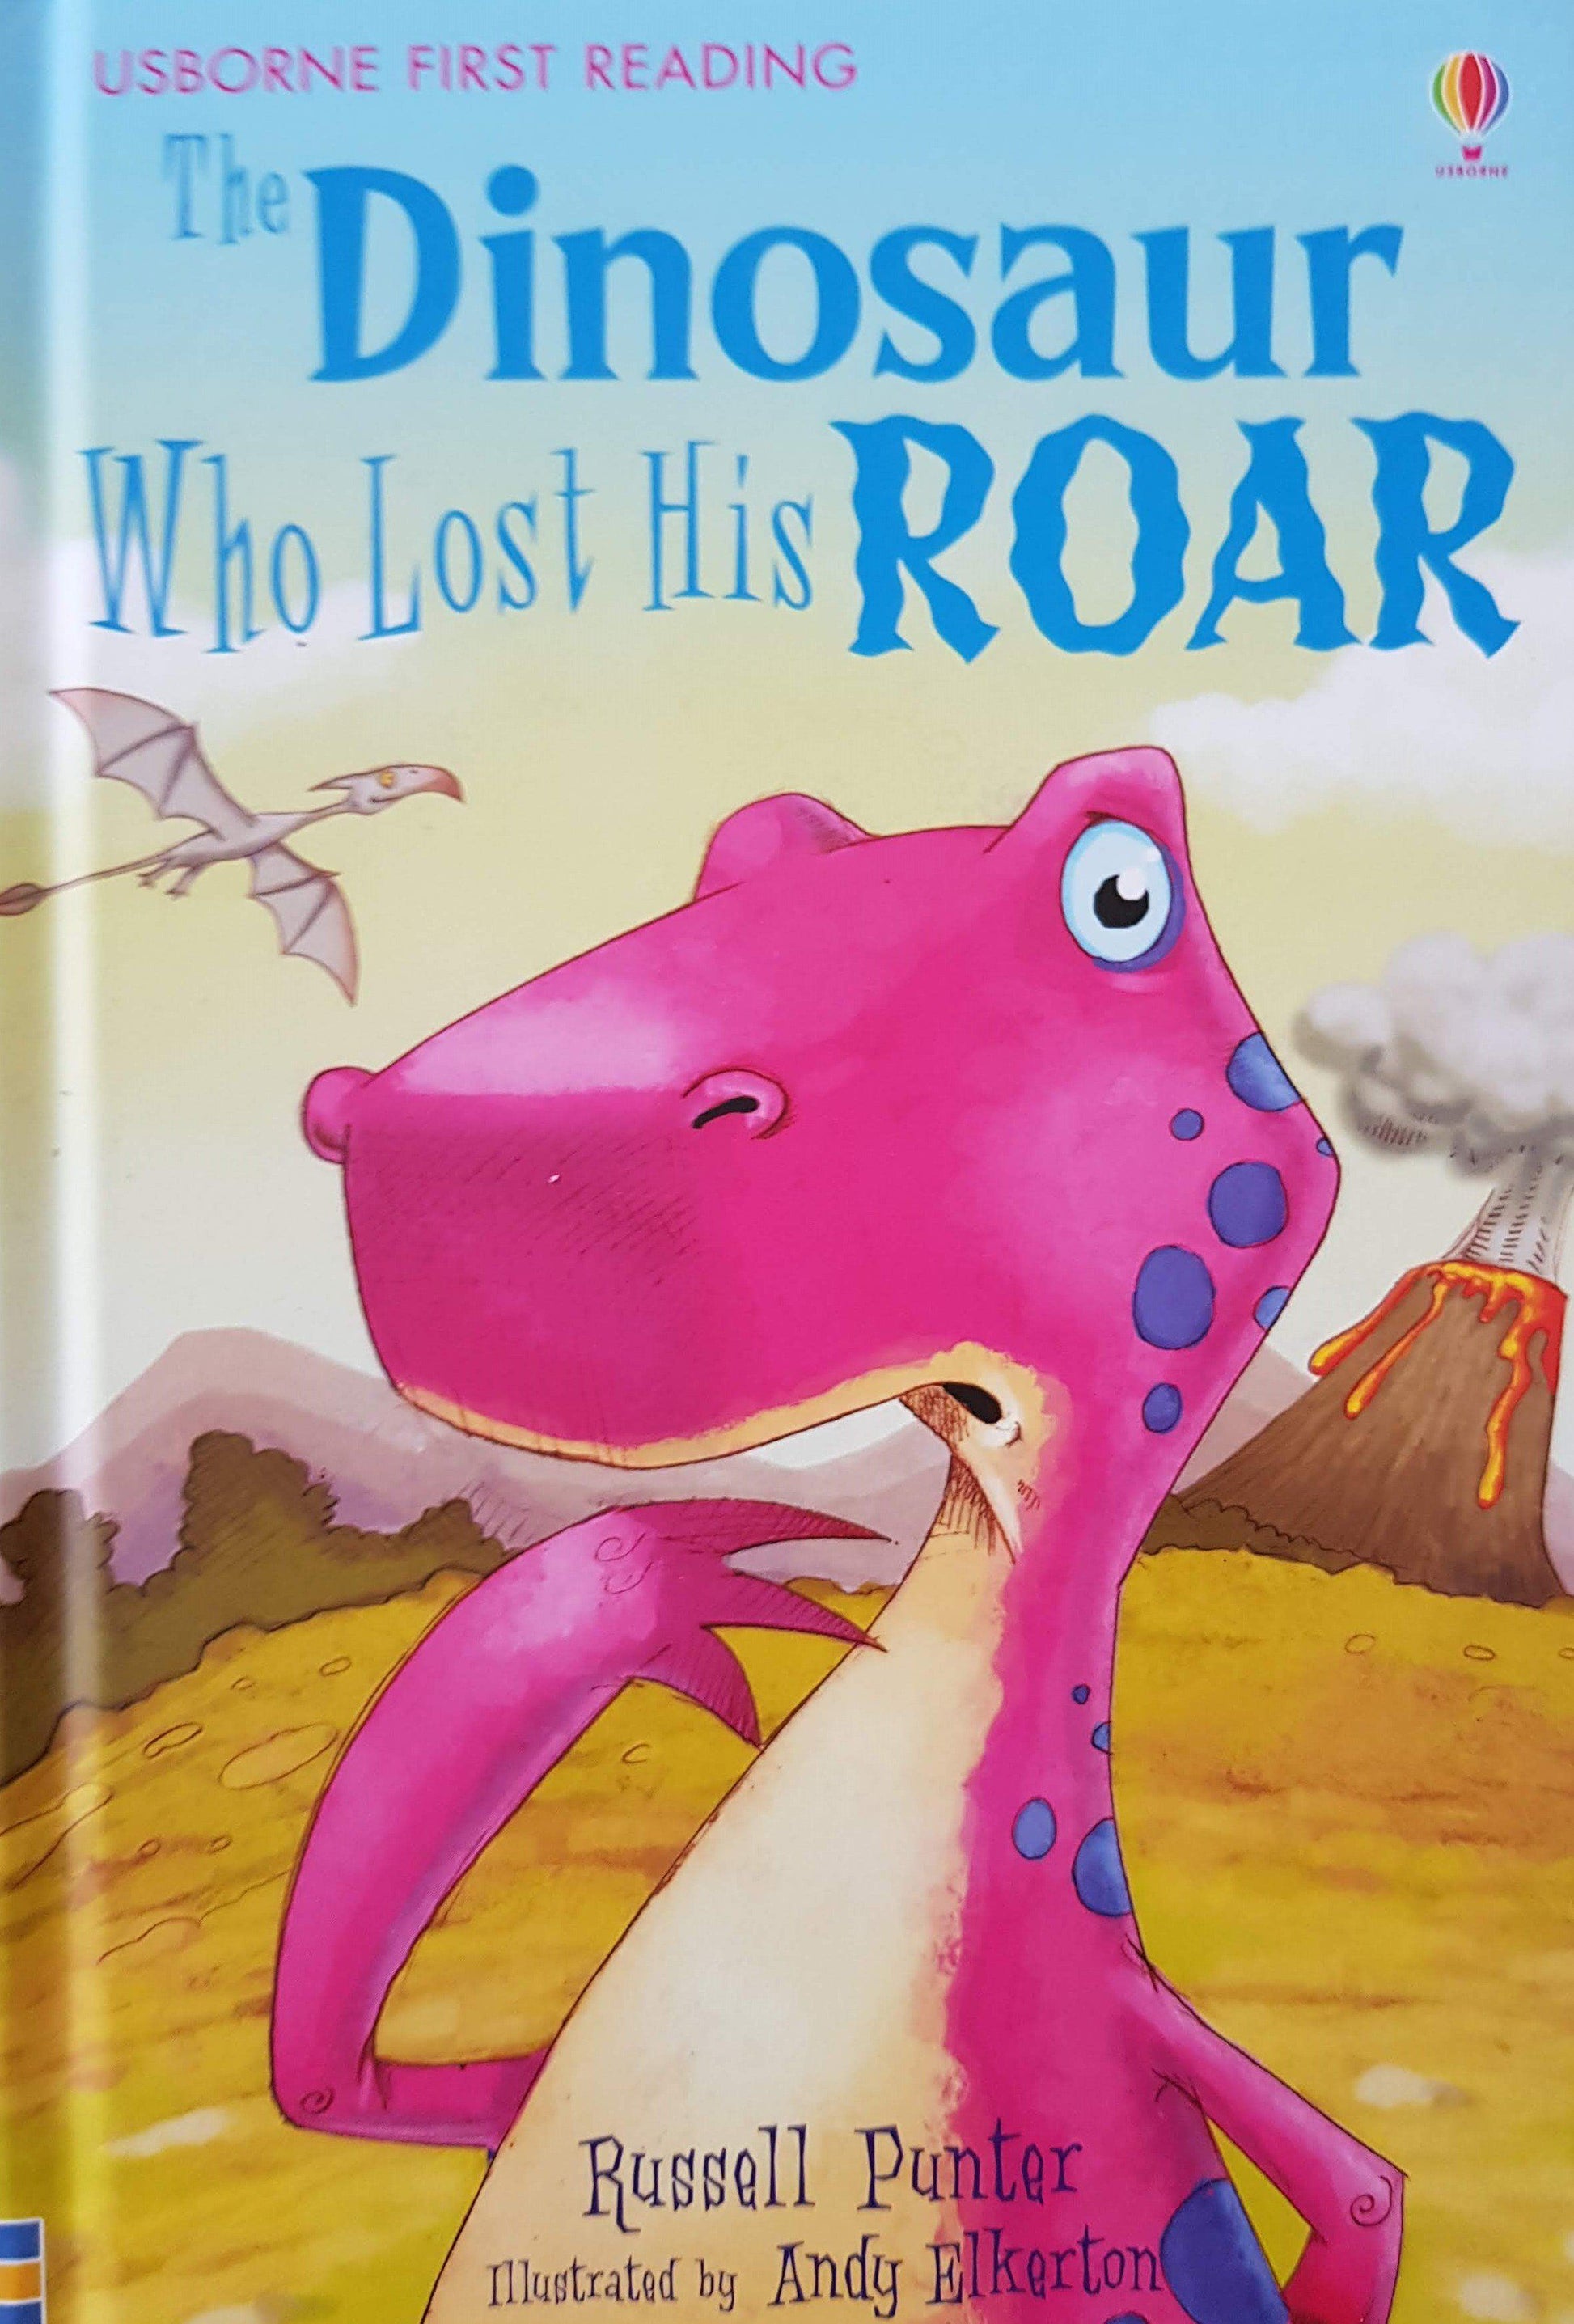 The Dinosaur who lost his roar New Usborne  (6269382885561)